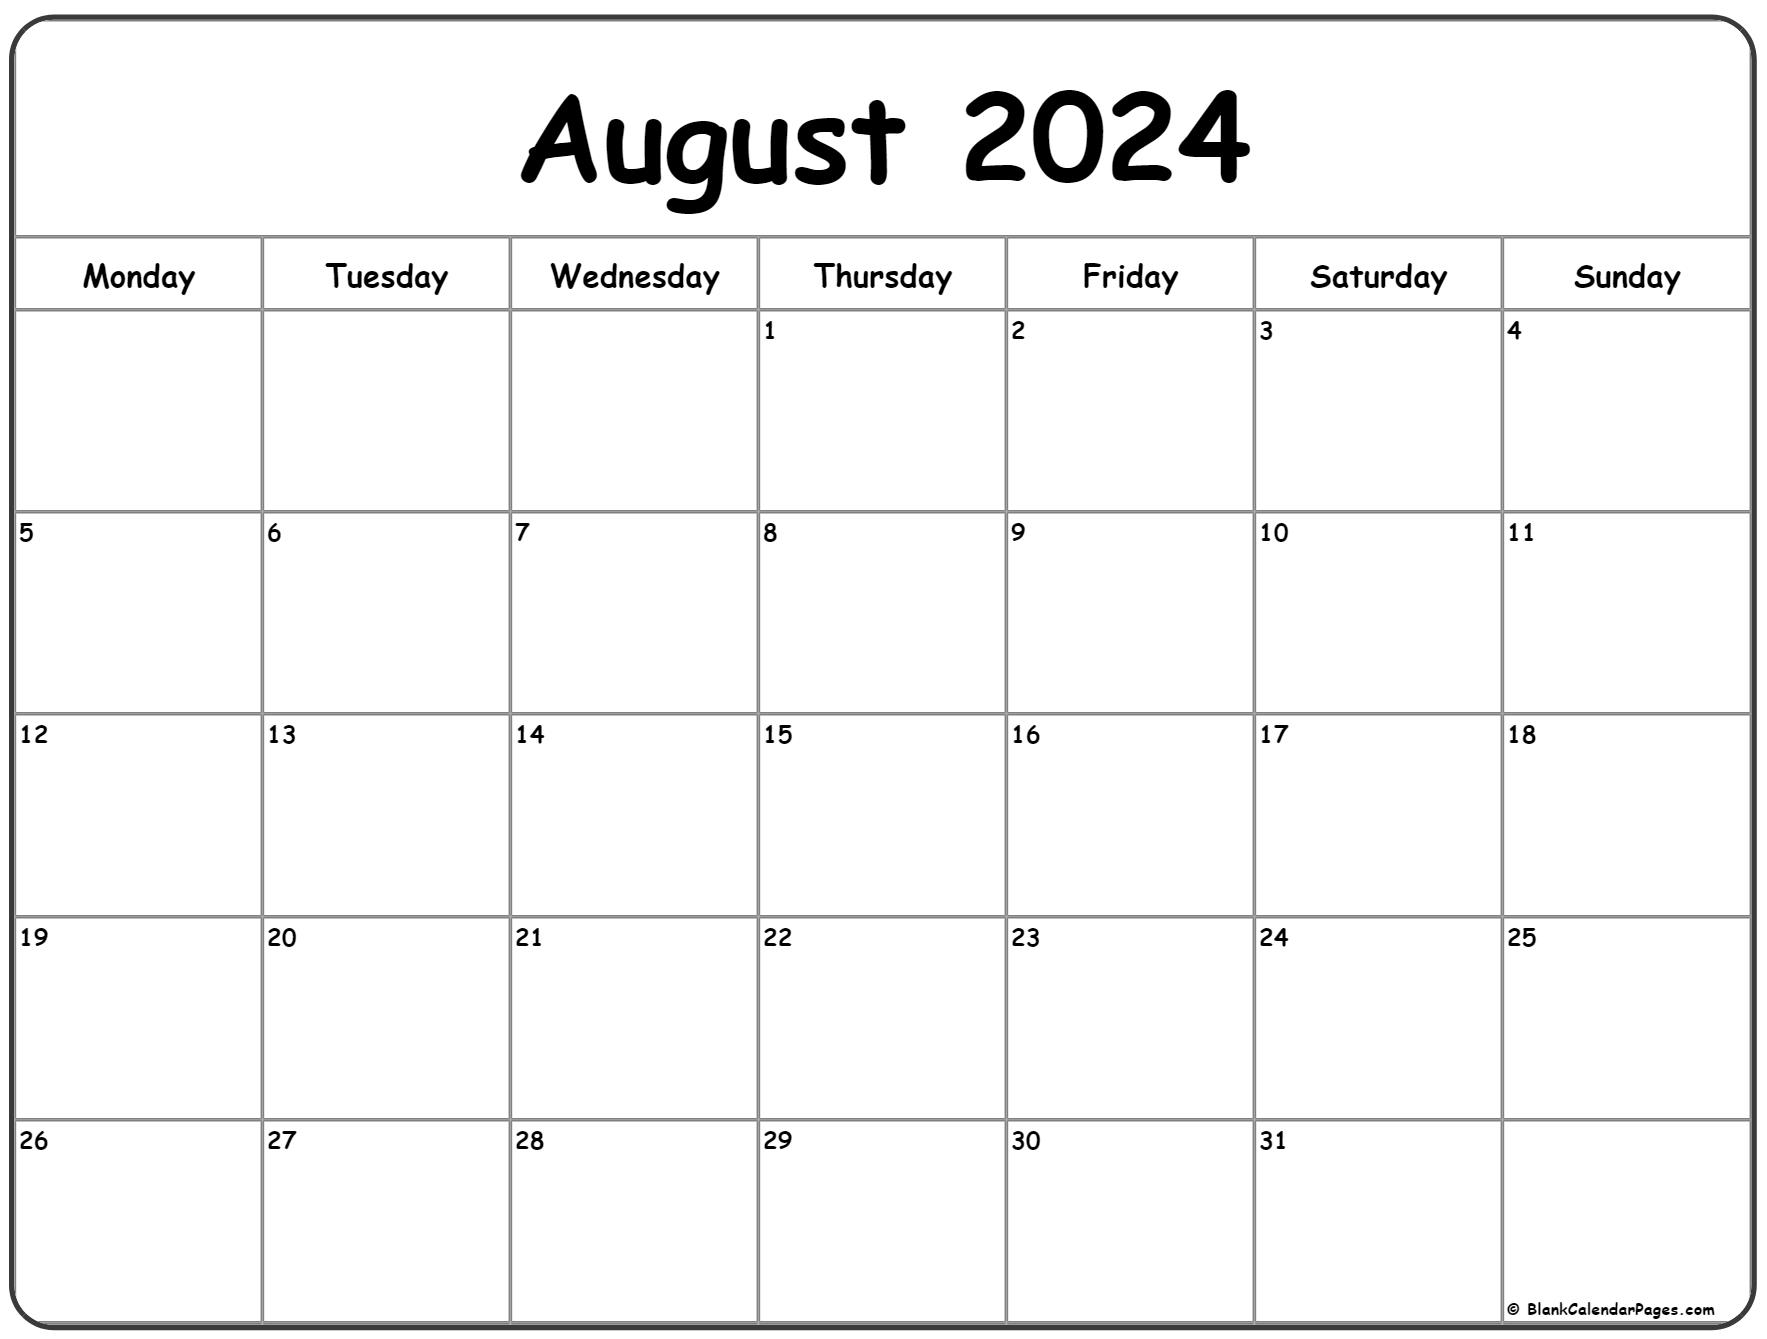 August 2024 Monday calendar. Monday to Sunday